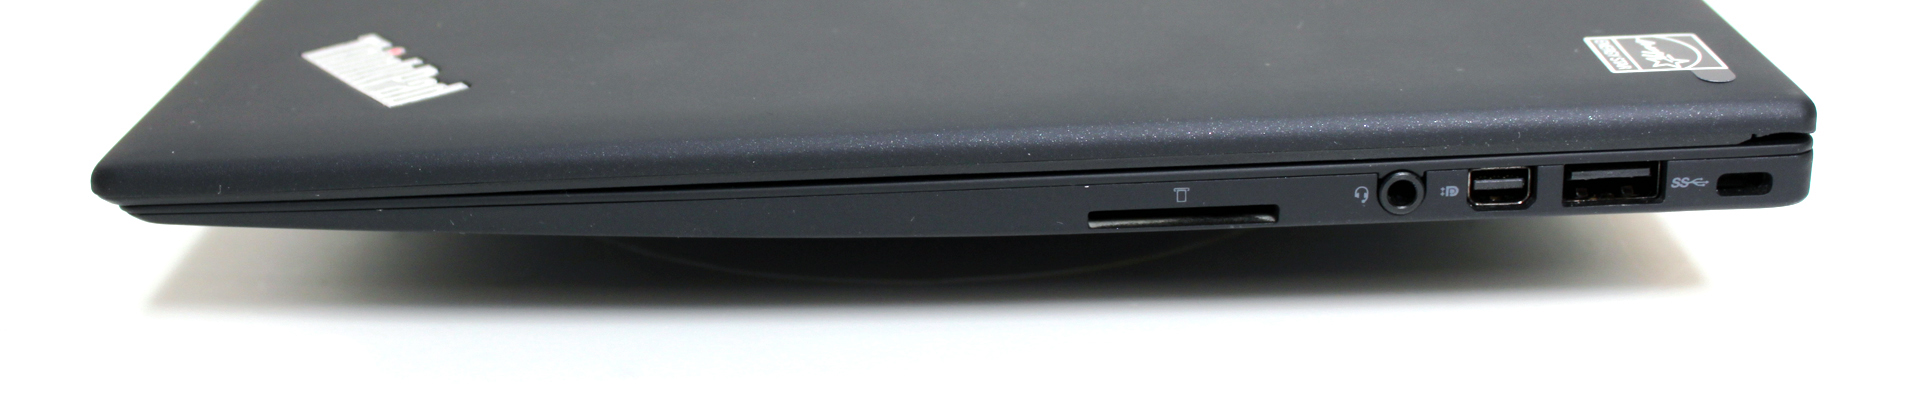 Lenovo ThinkPad X1 Carbon (2012) 1. Gen._9